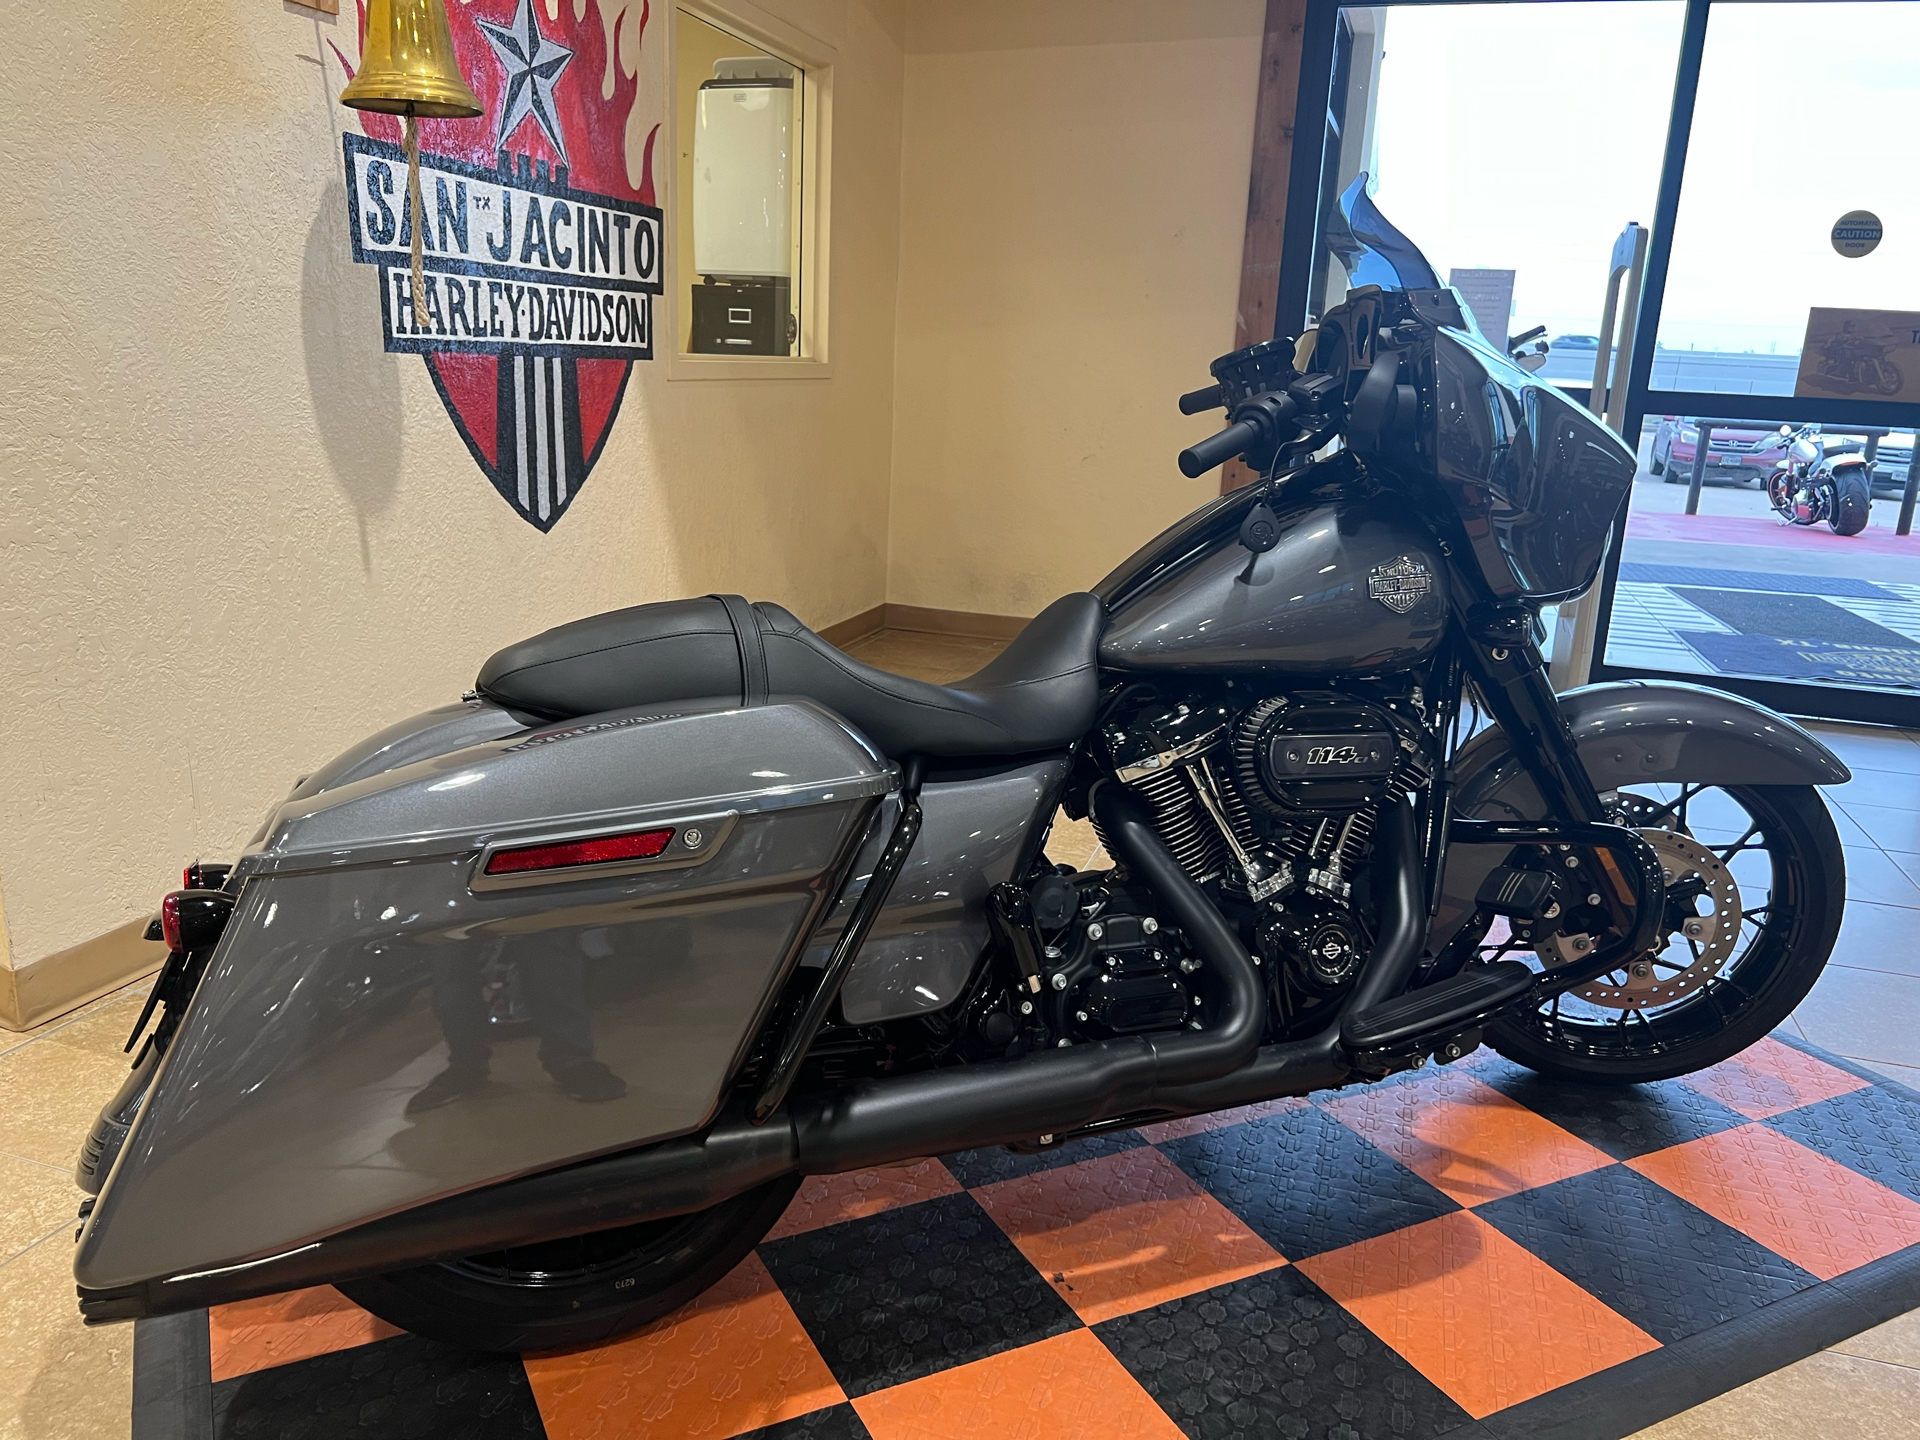 2021 Harley-Davidson Street Glide® Special in Pasadena, Texas - Photo 3